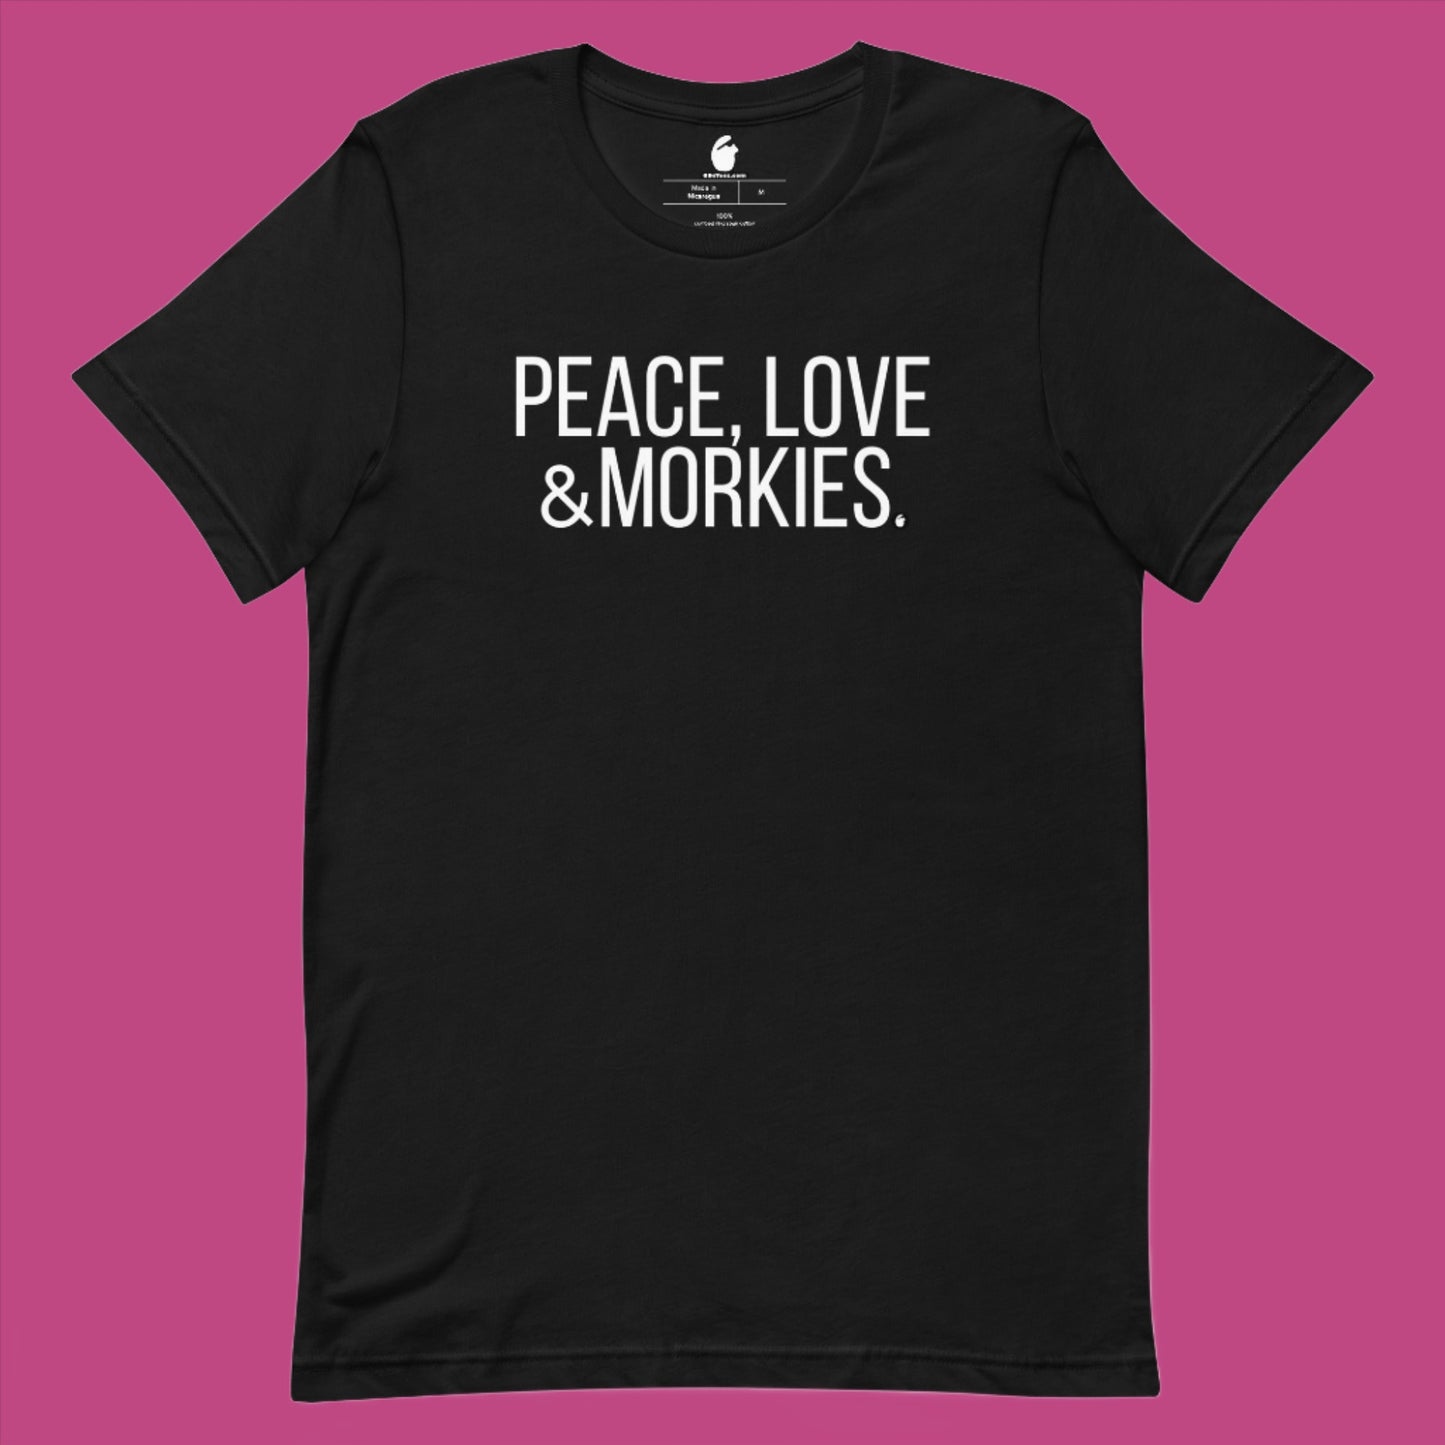 MORKIES Short-Sleeve Unisex t-shirt